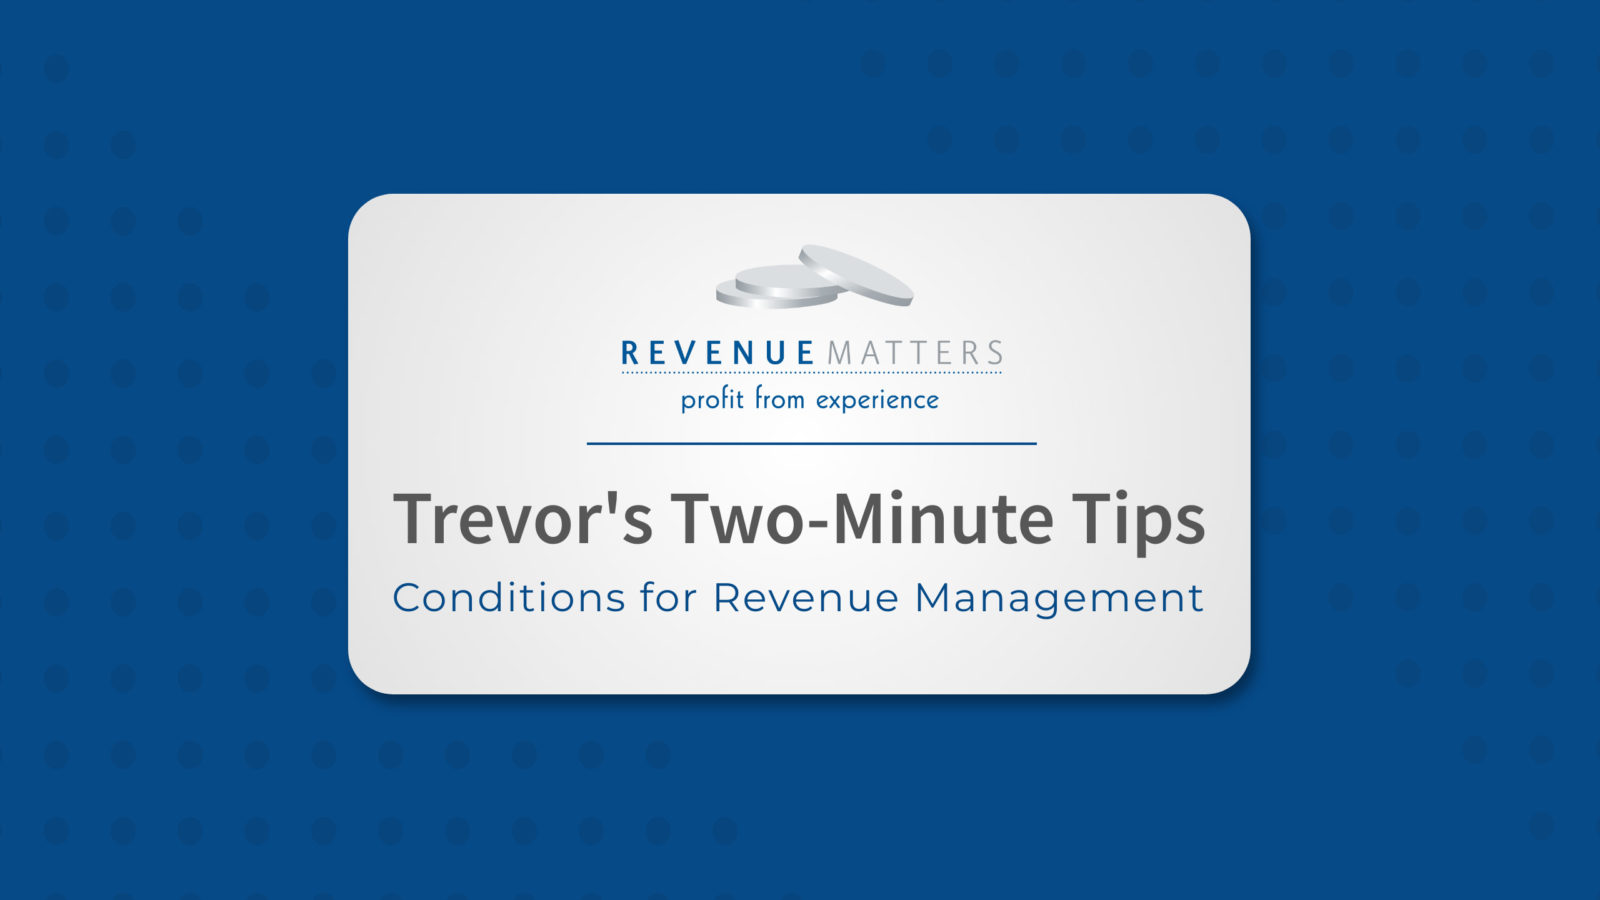 Conditions for Revenue Management